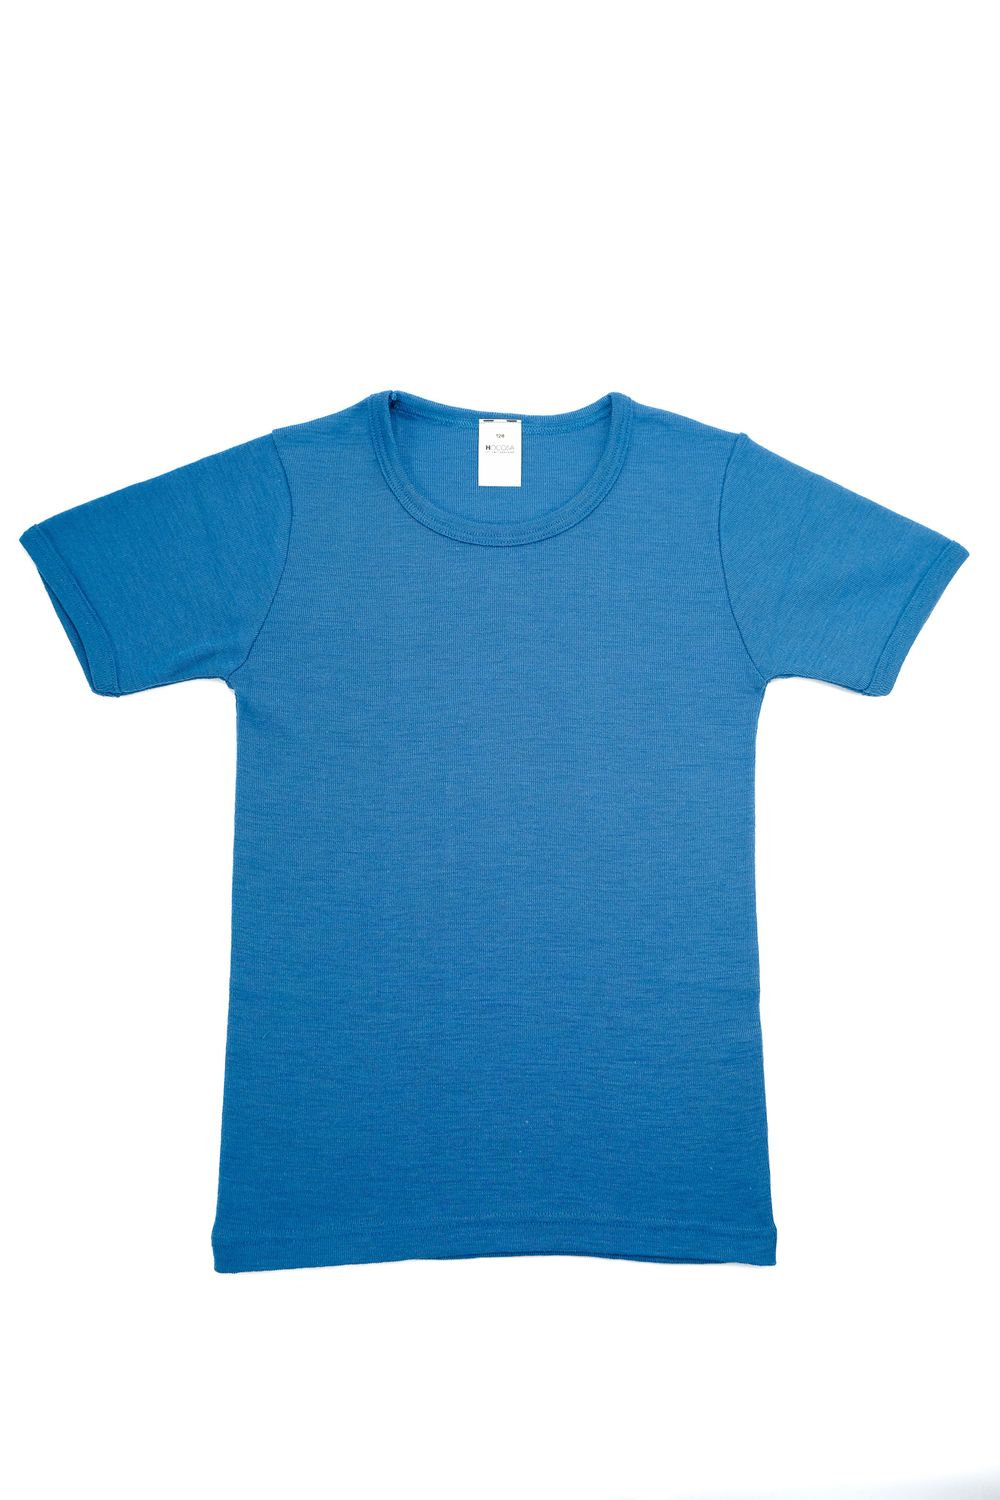 Wolle-Seide Kurzarm-Shirt dunkelblau 140